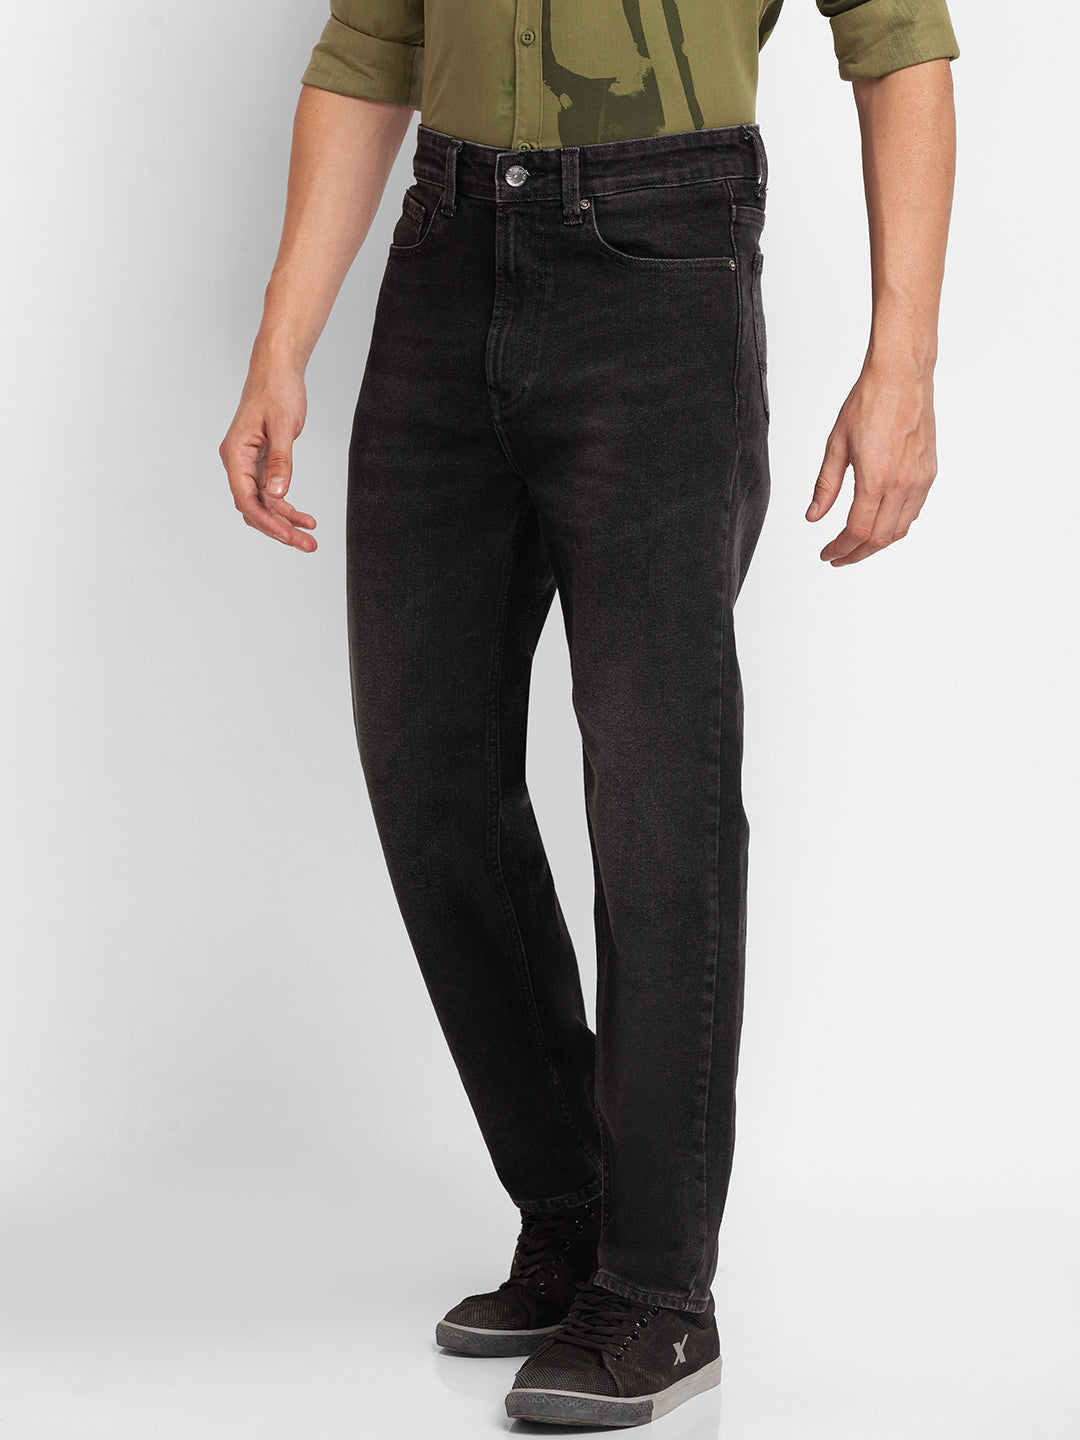 Spykar Carbon Black Cotton Loose Fit Regular Length Jeans For Men (Renato)